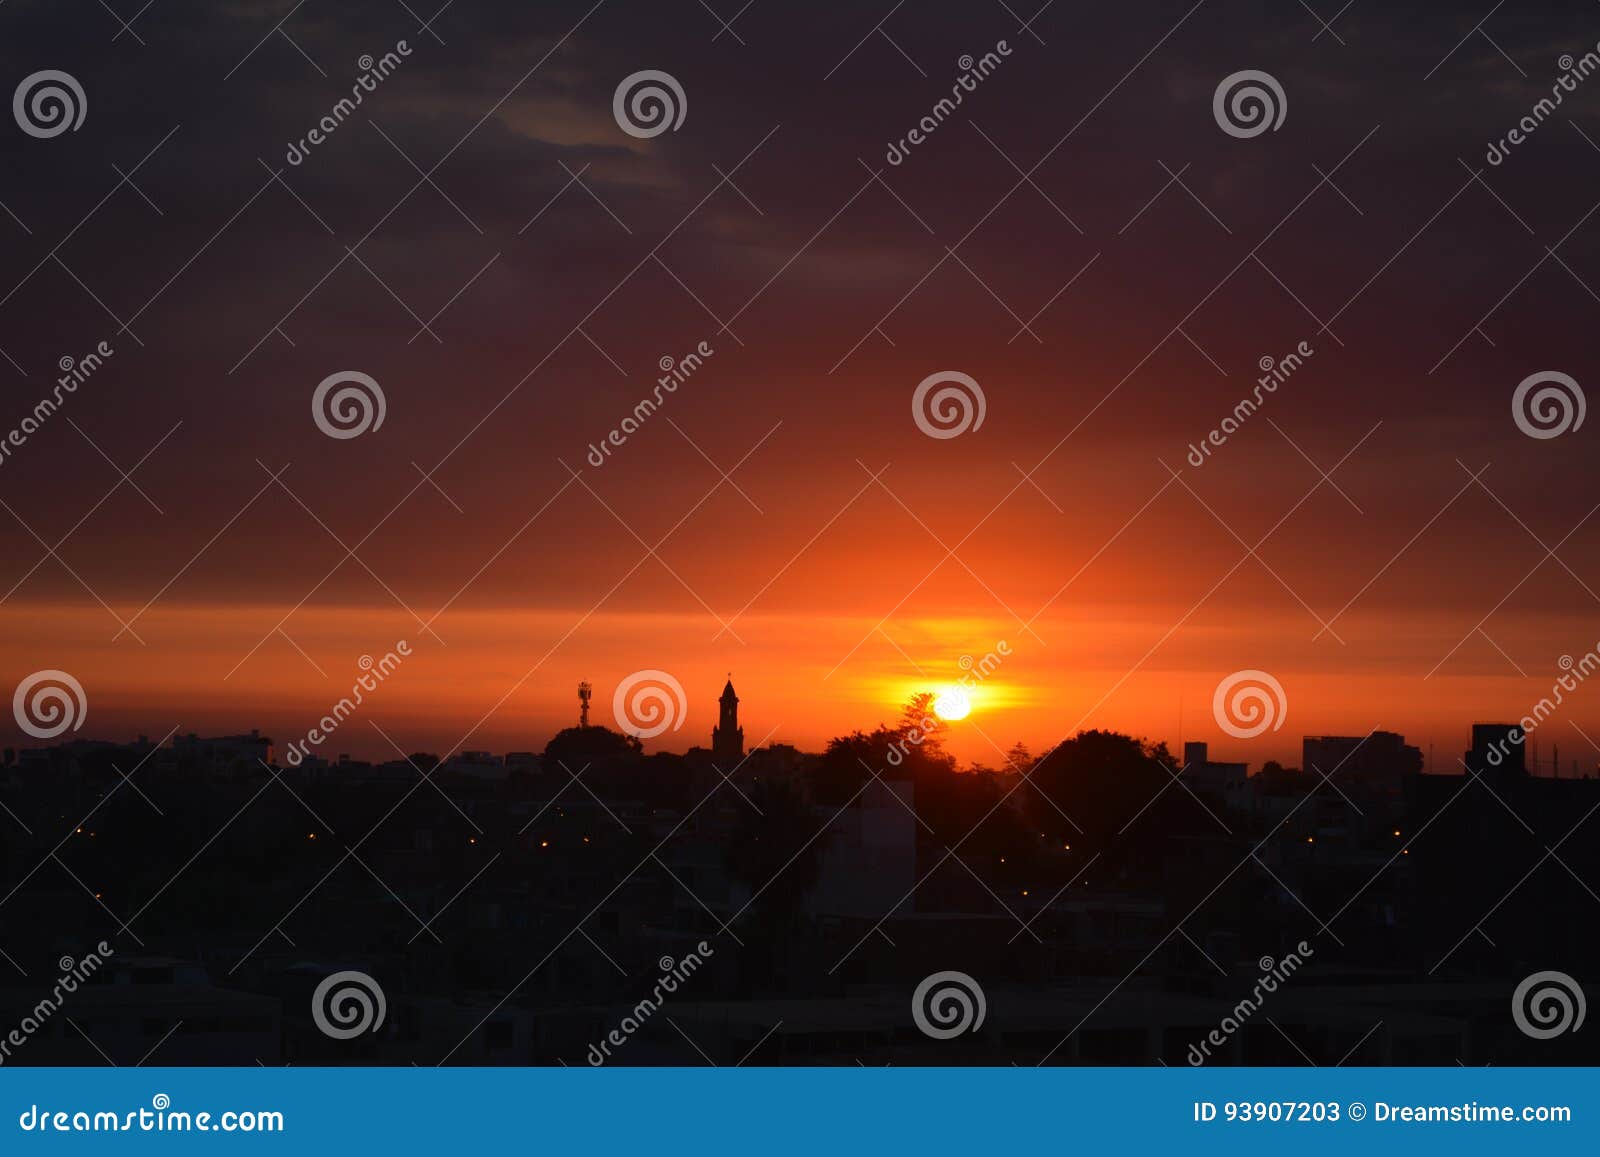 sunset - barranco